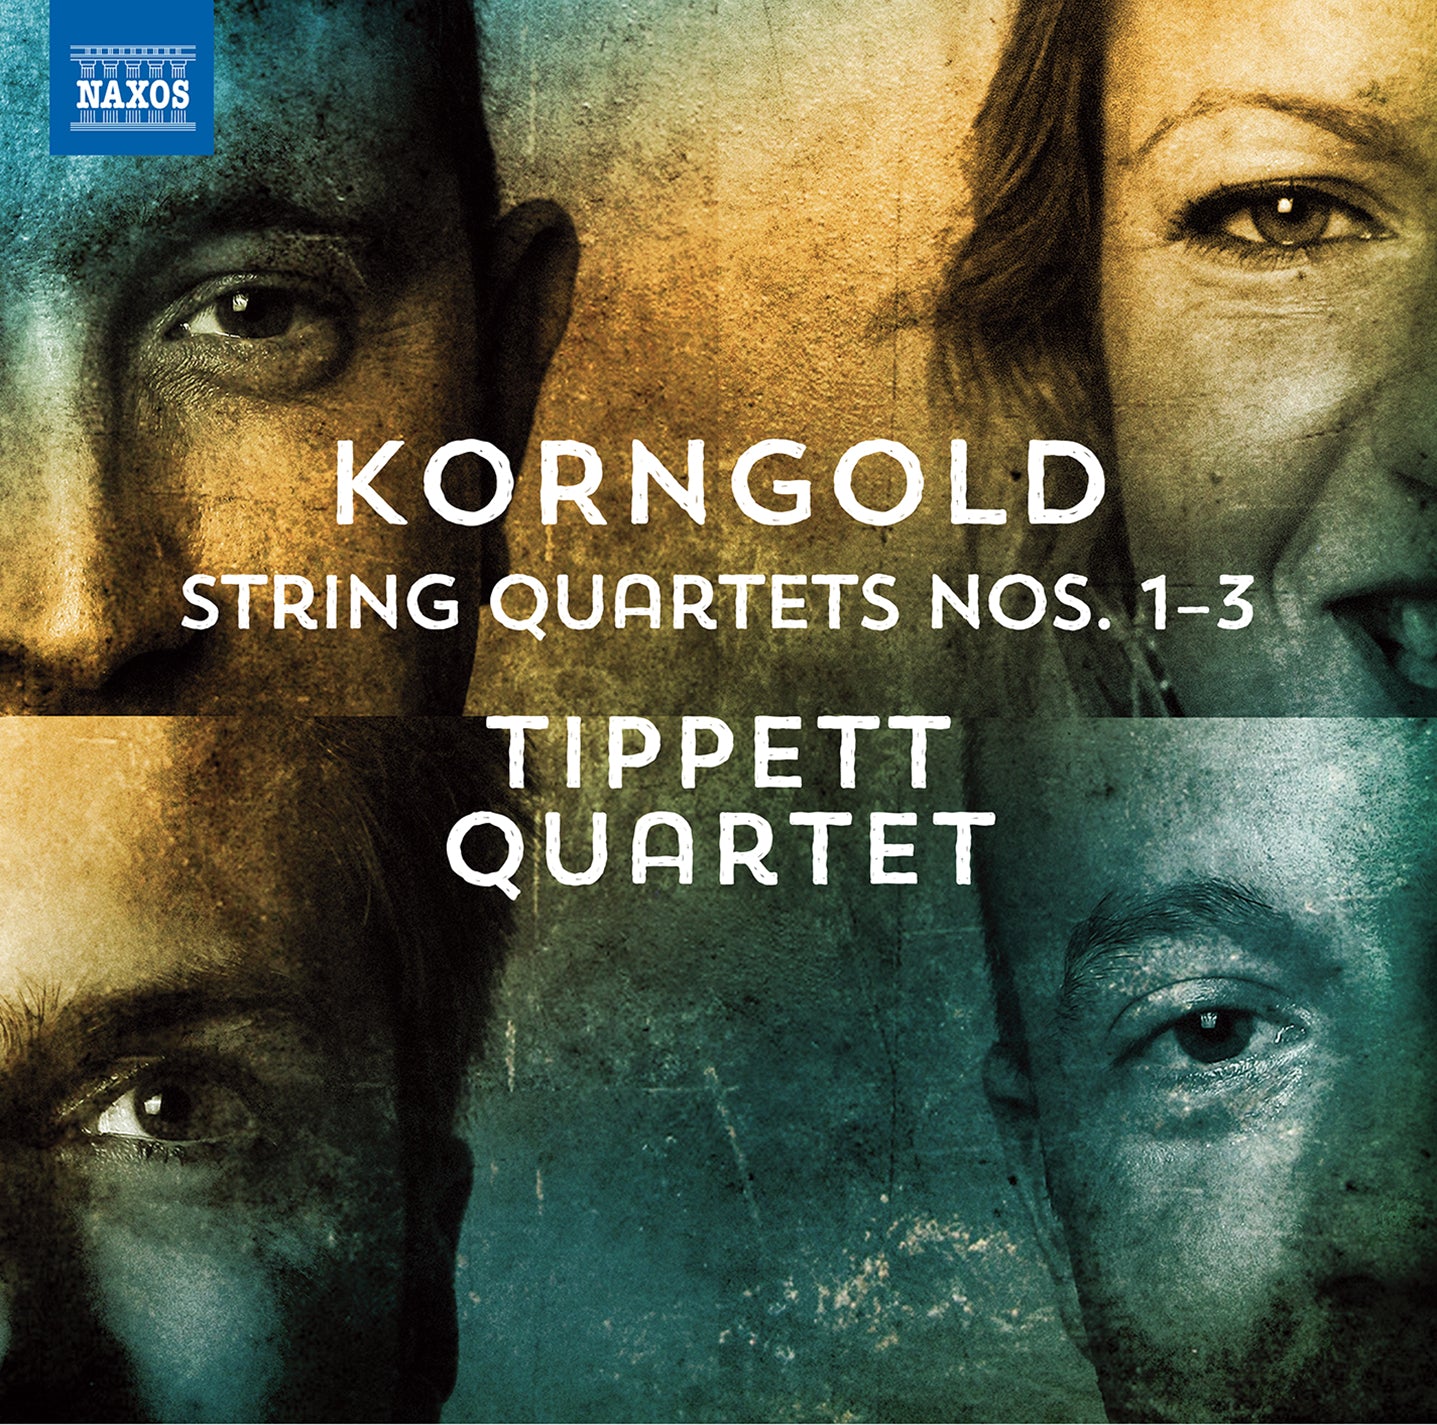 Korngold: String Quartets Nos. 1-3 / Tippett Quartet